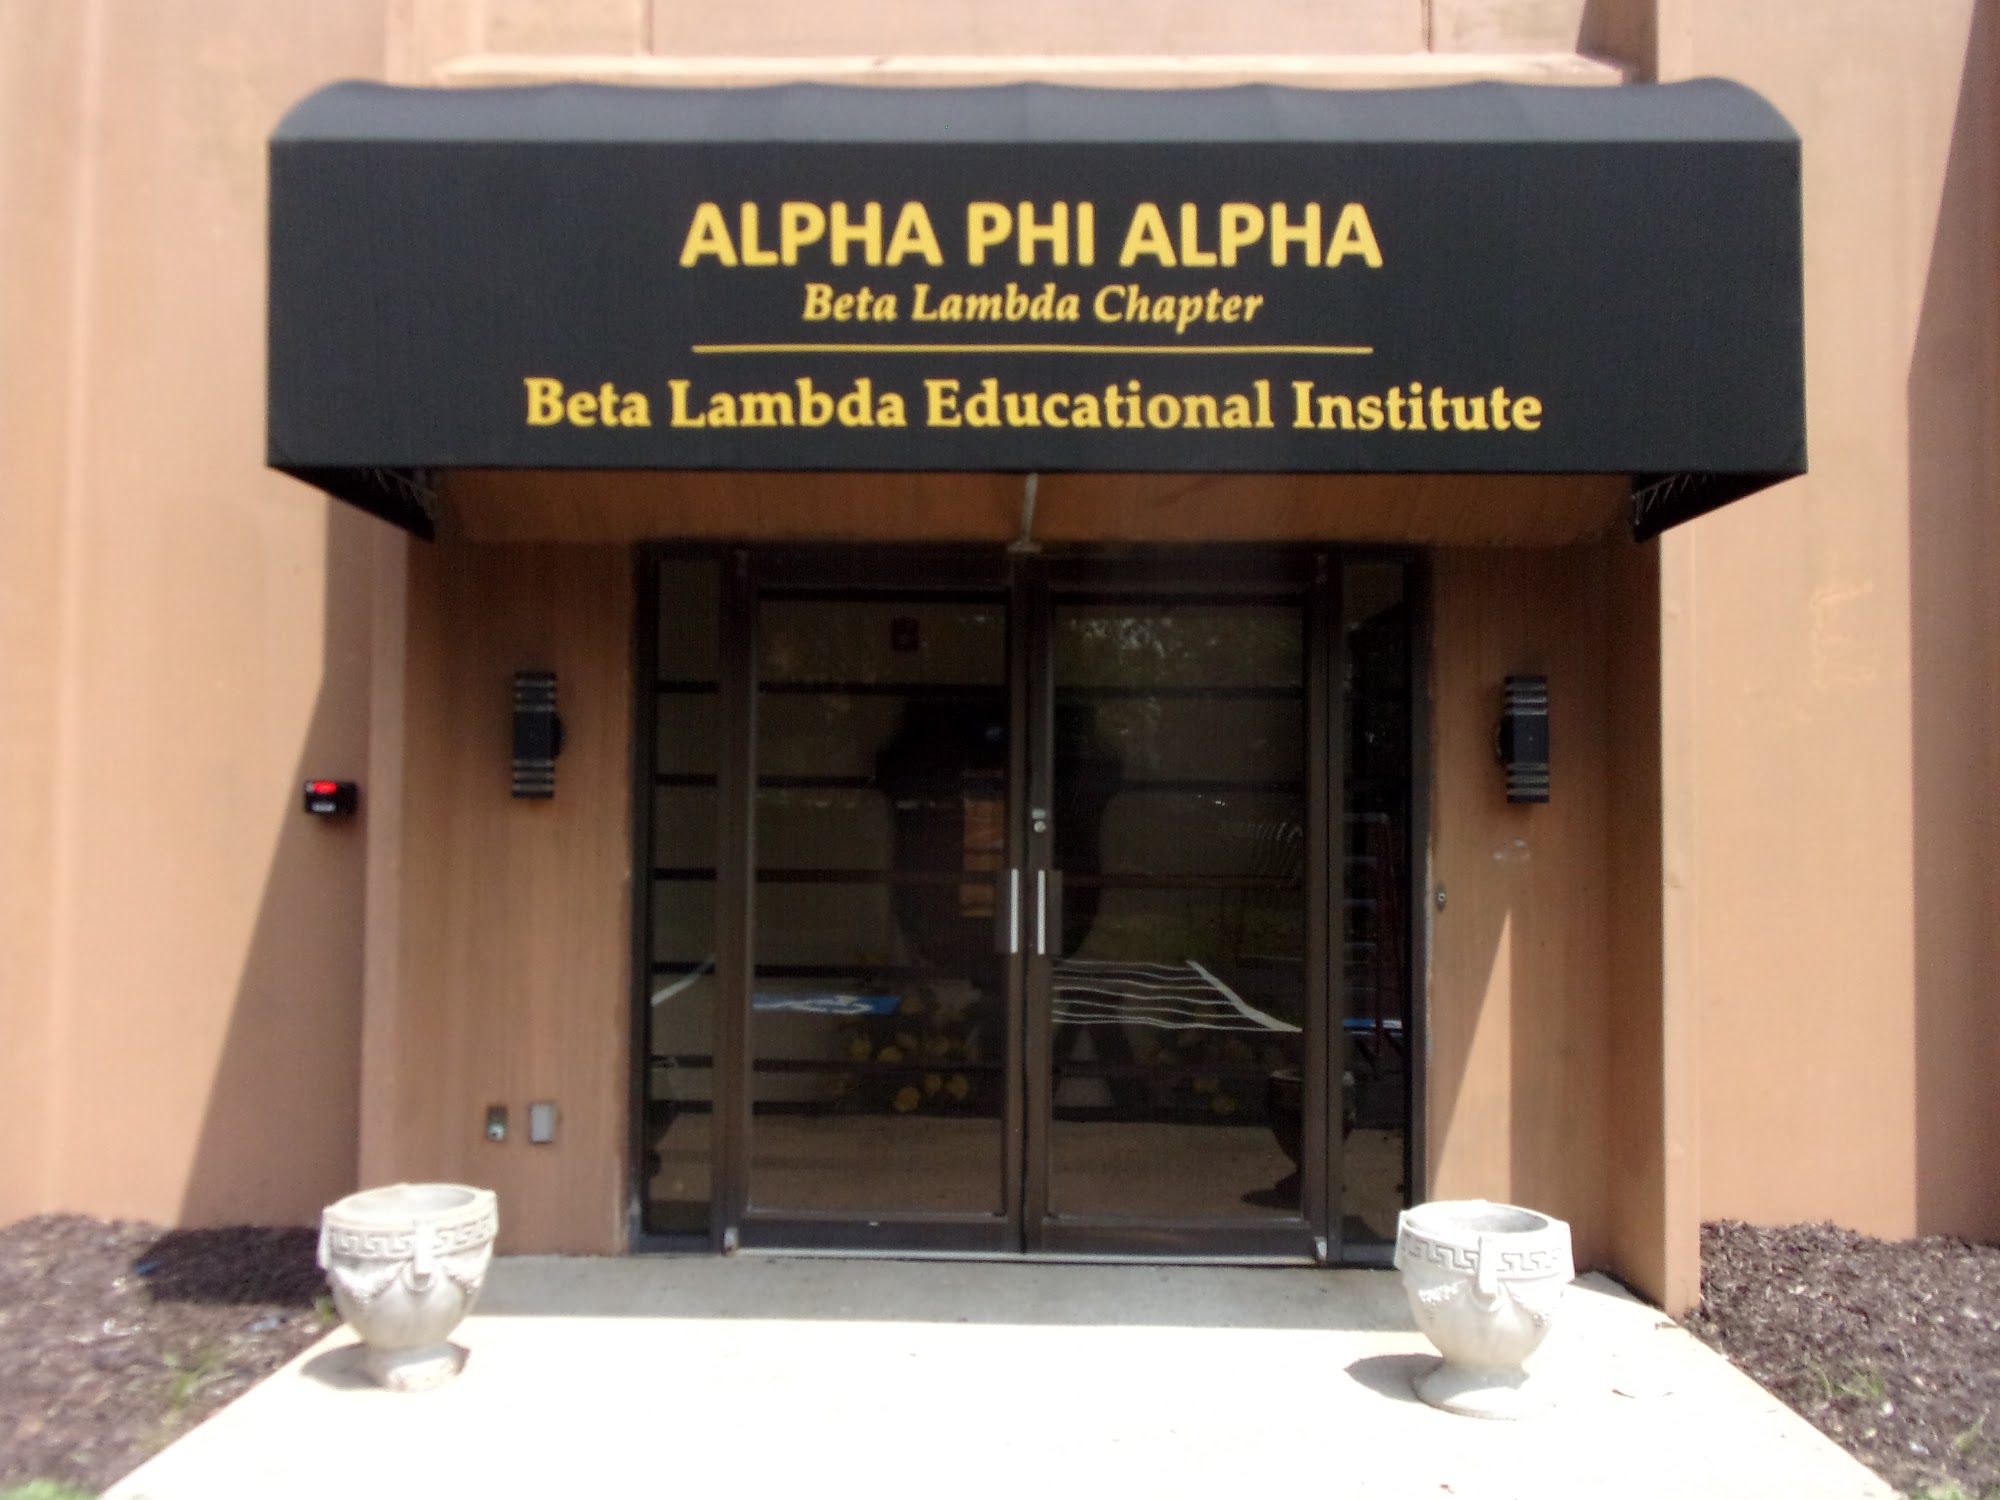 Beta Lambda Educational Institute and Alpha Phi Alpha Fraternity, Inc.